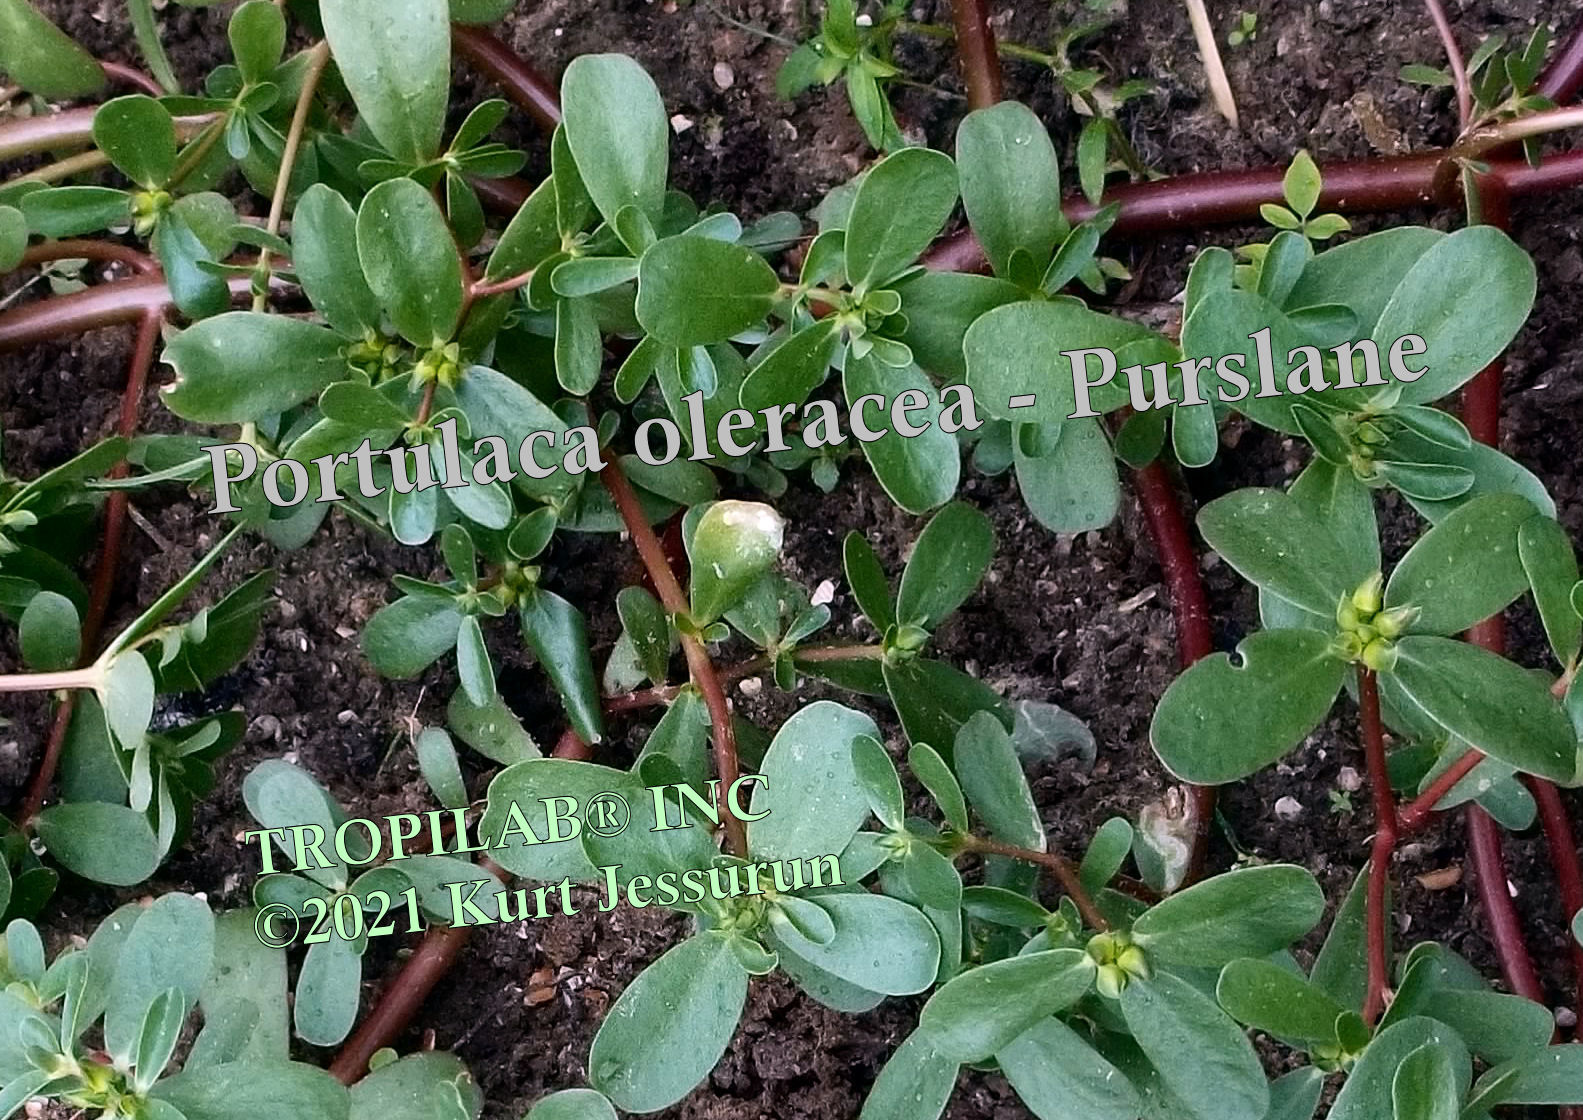 Portulaca oleracea - Purslane - Tropilab